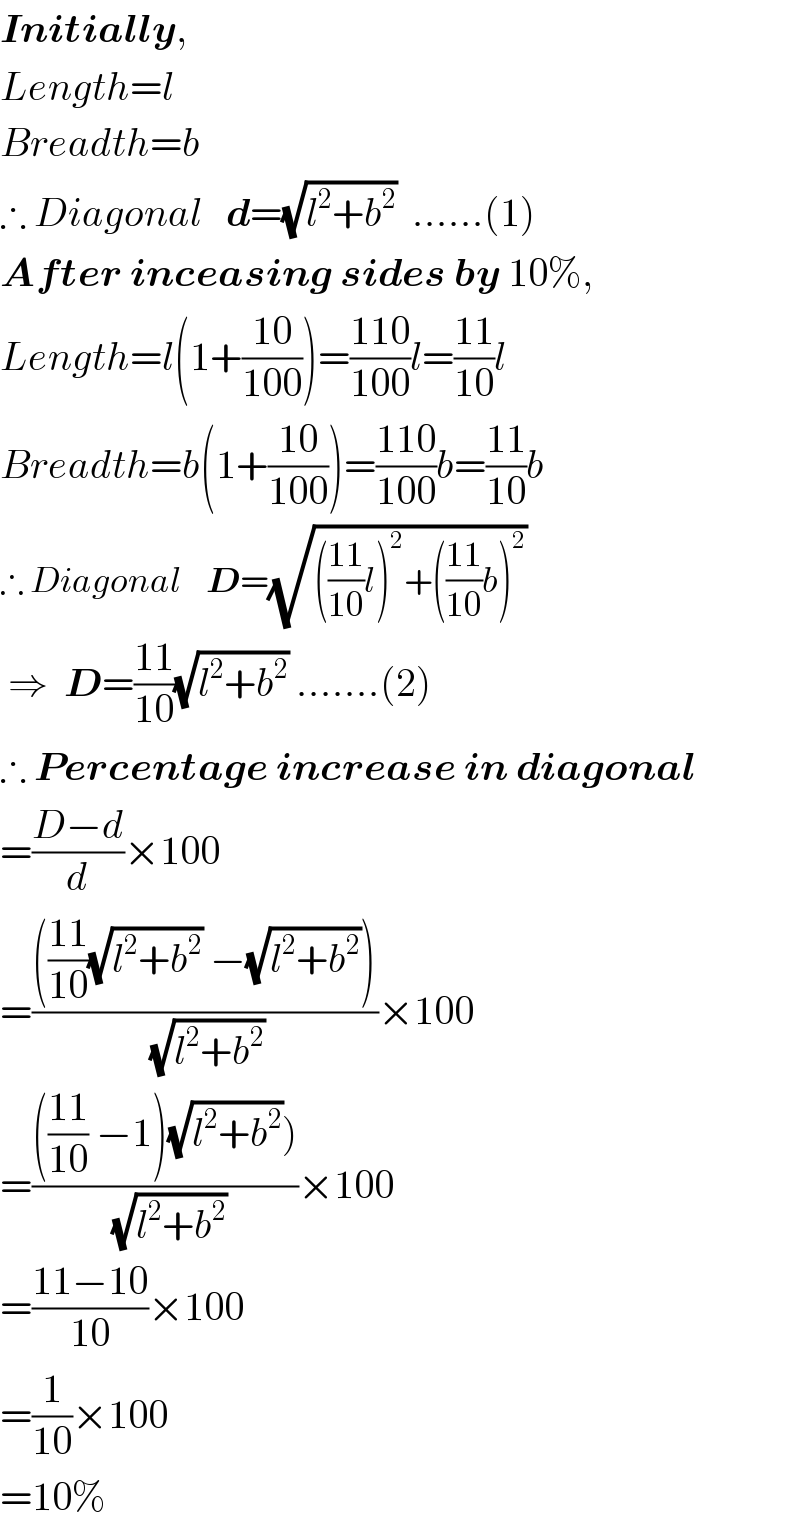 Initially,  Length=l  Breadth=b  ∴ Diagonal   d=(√(l^2 +b^2 ))  ......(1)  After inceasing sides by 10%,  Length=l(1+((10)/(100)))=((110)/(100))l=((11)/(10))l  Breadth=b(1+((10)/(100)))=((110)/(100))b=((11)/(10))b  ∴ Diagonal    D=(√((((11)/(10))l)^2 +(((11)/(10))b)^2 ))   ⇒  D=((11)/(10))(√(l^2 +b^2 )) .......(2)  ∴ Percentage increase in diagonal   =((D−d)/d)×100  =(((((11)/(10))(√(l^2 +b^2 )) −(√(l^2 +b^2 ))))/(√(l^2 +b^2 )))×100  =(((((11)/(10)) −1)(√(l^2 +b^2 ))))/(√(l^2 +b^2 )))×100  =((11−10)/(10))×100  =(1/(10))×100  =10%  